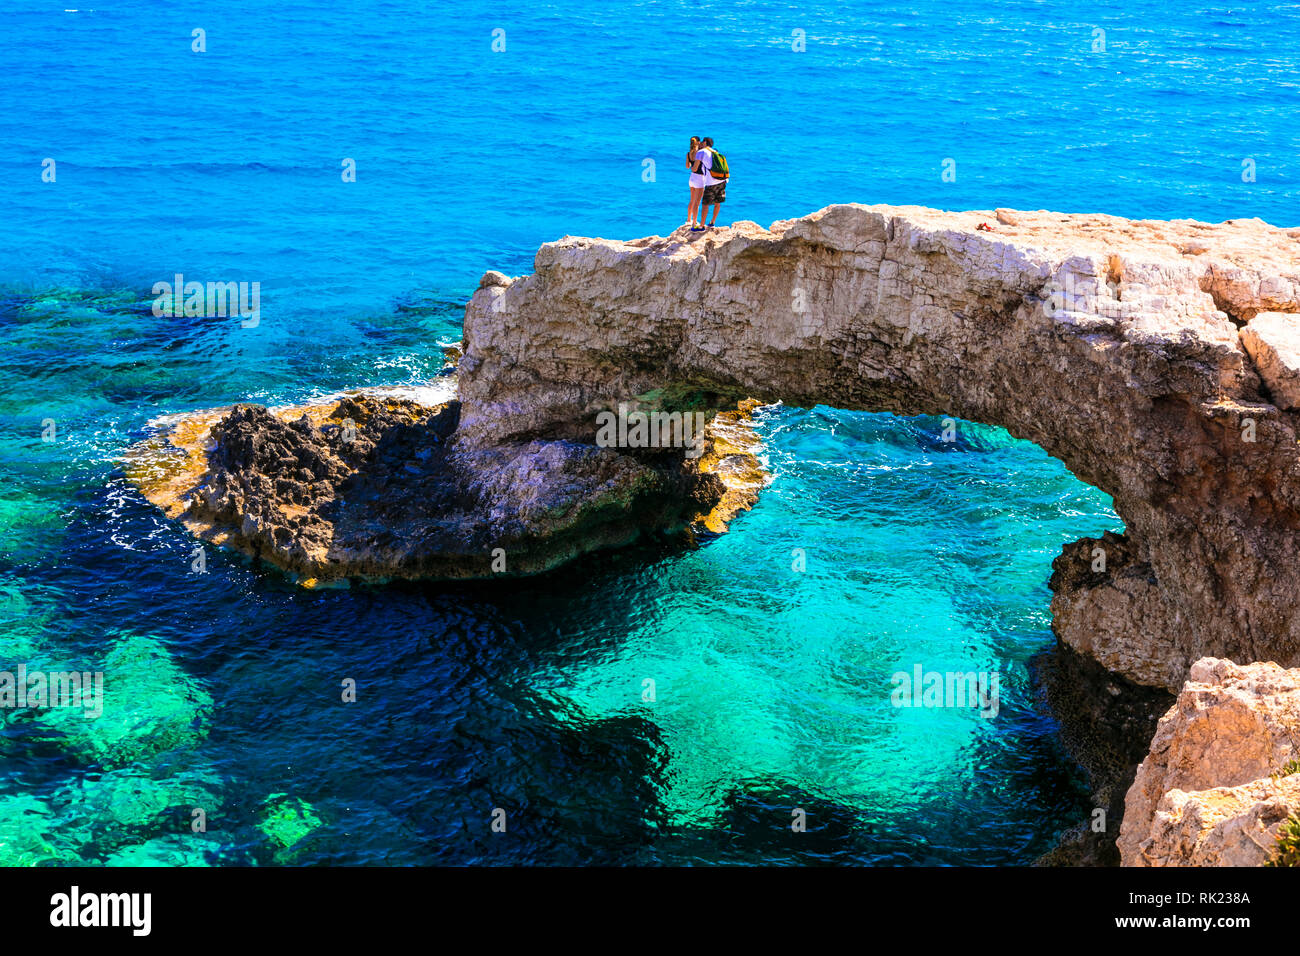 Beeindruckende Felsen und das türkisfarbene Meer in Ayia Napa, Zypern Insel. Stockfoto